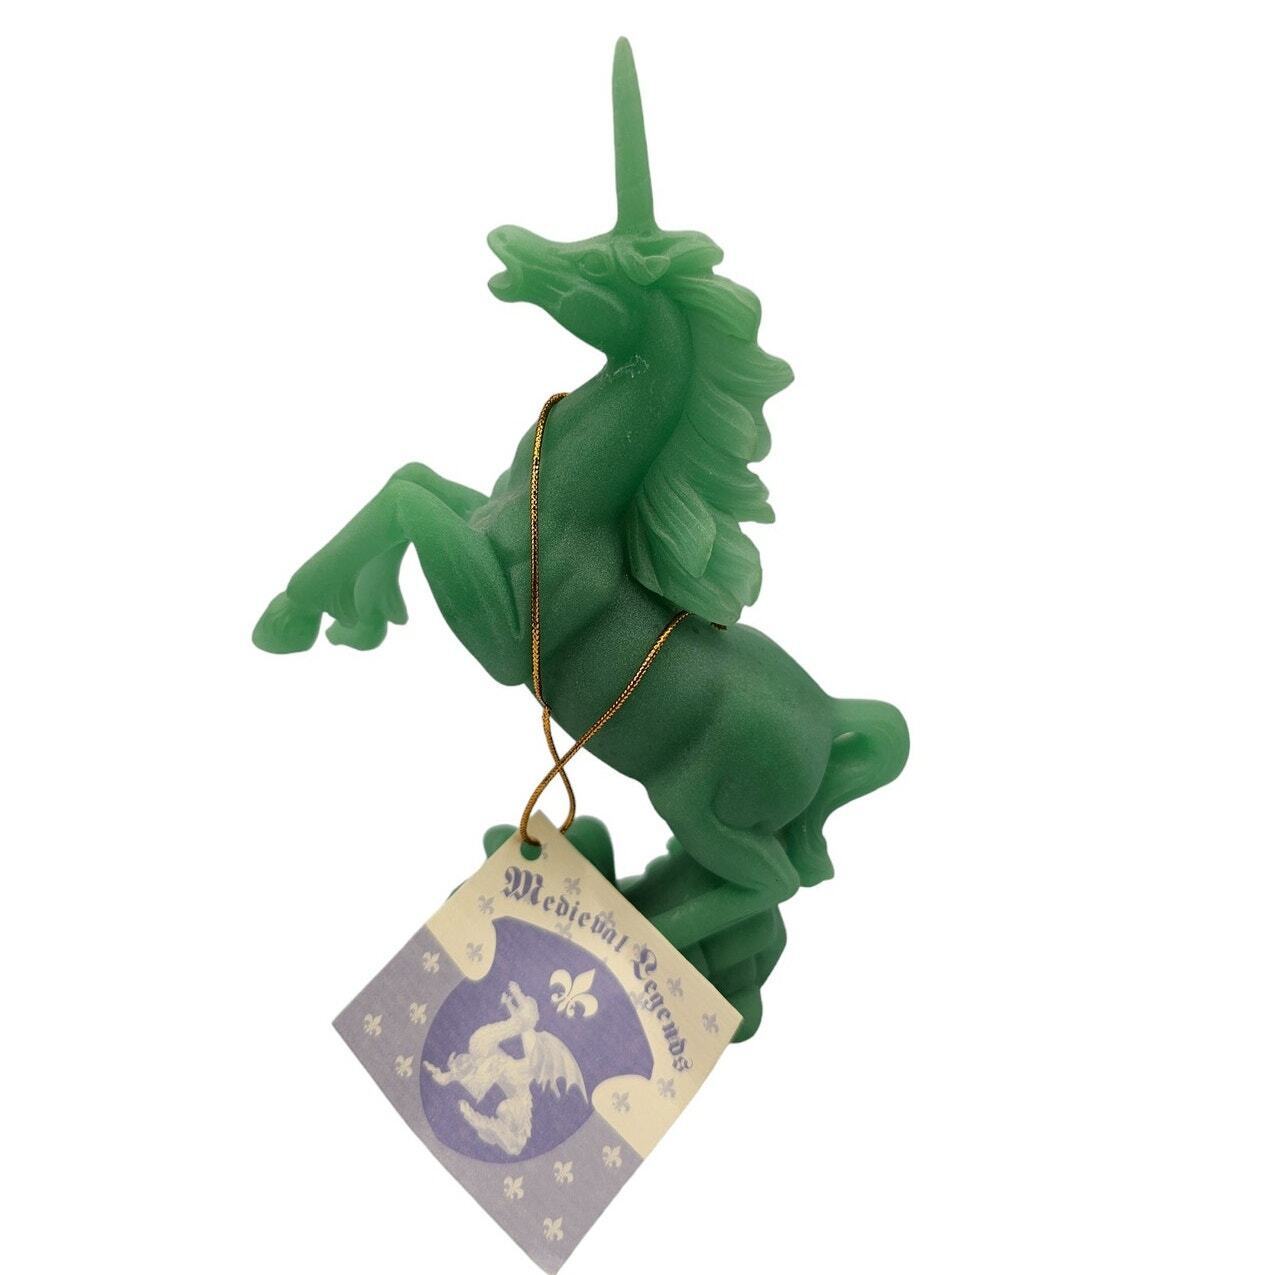 Vintage Mystic Green Unicorn Medieval Legends Figurine